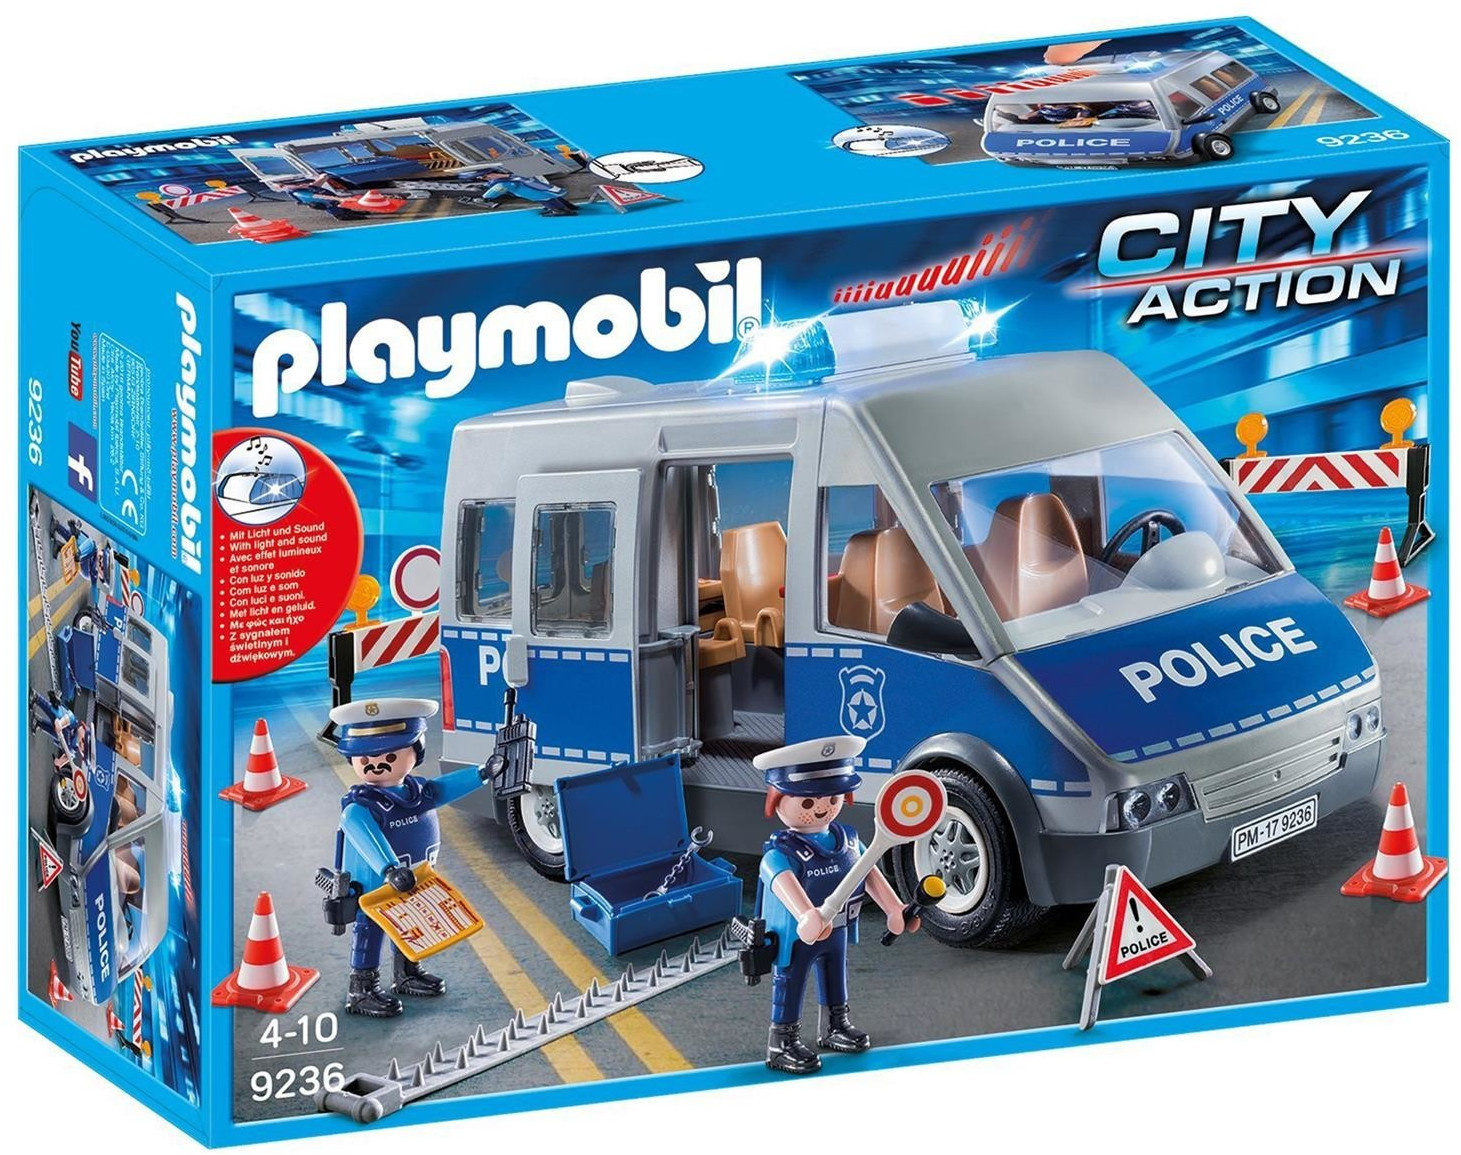 Playmobil camion de police lumineux et sonore - Playmobil